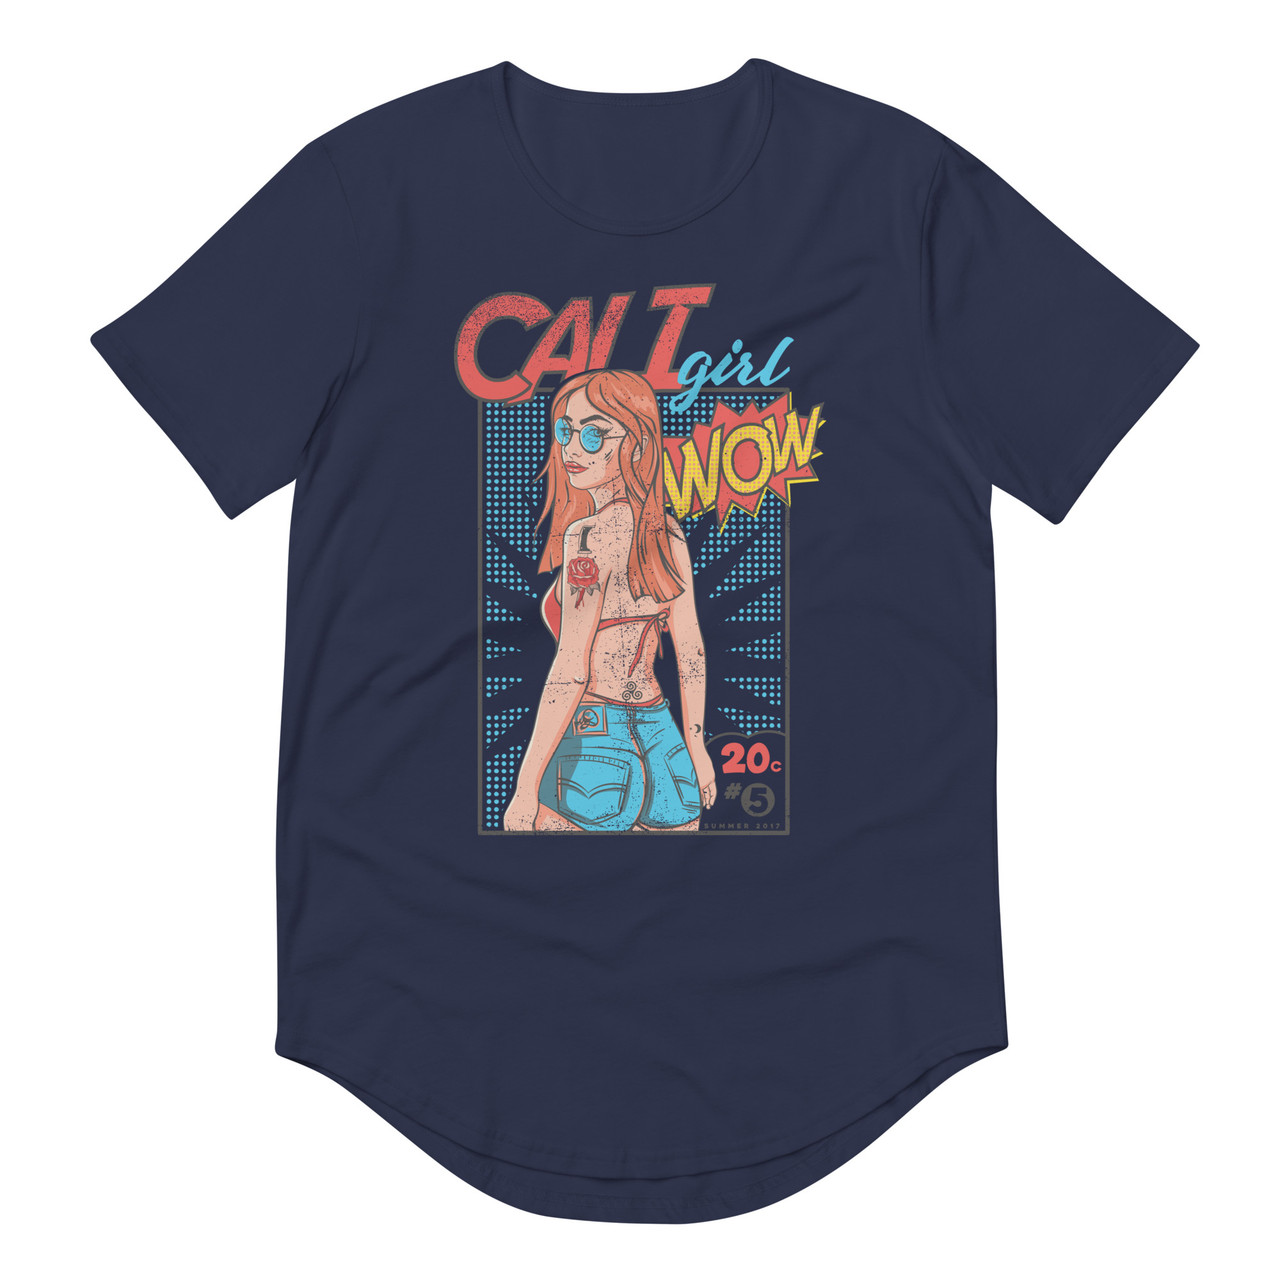 Cali Girl Curved Hem Tee - Bella + Canvas 3003 